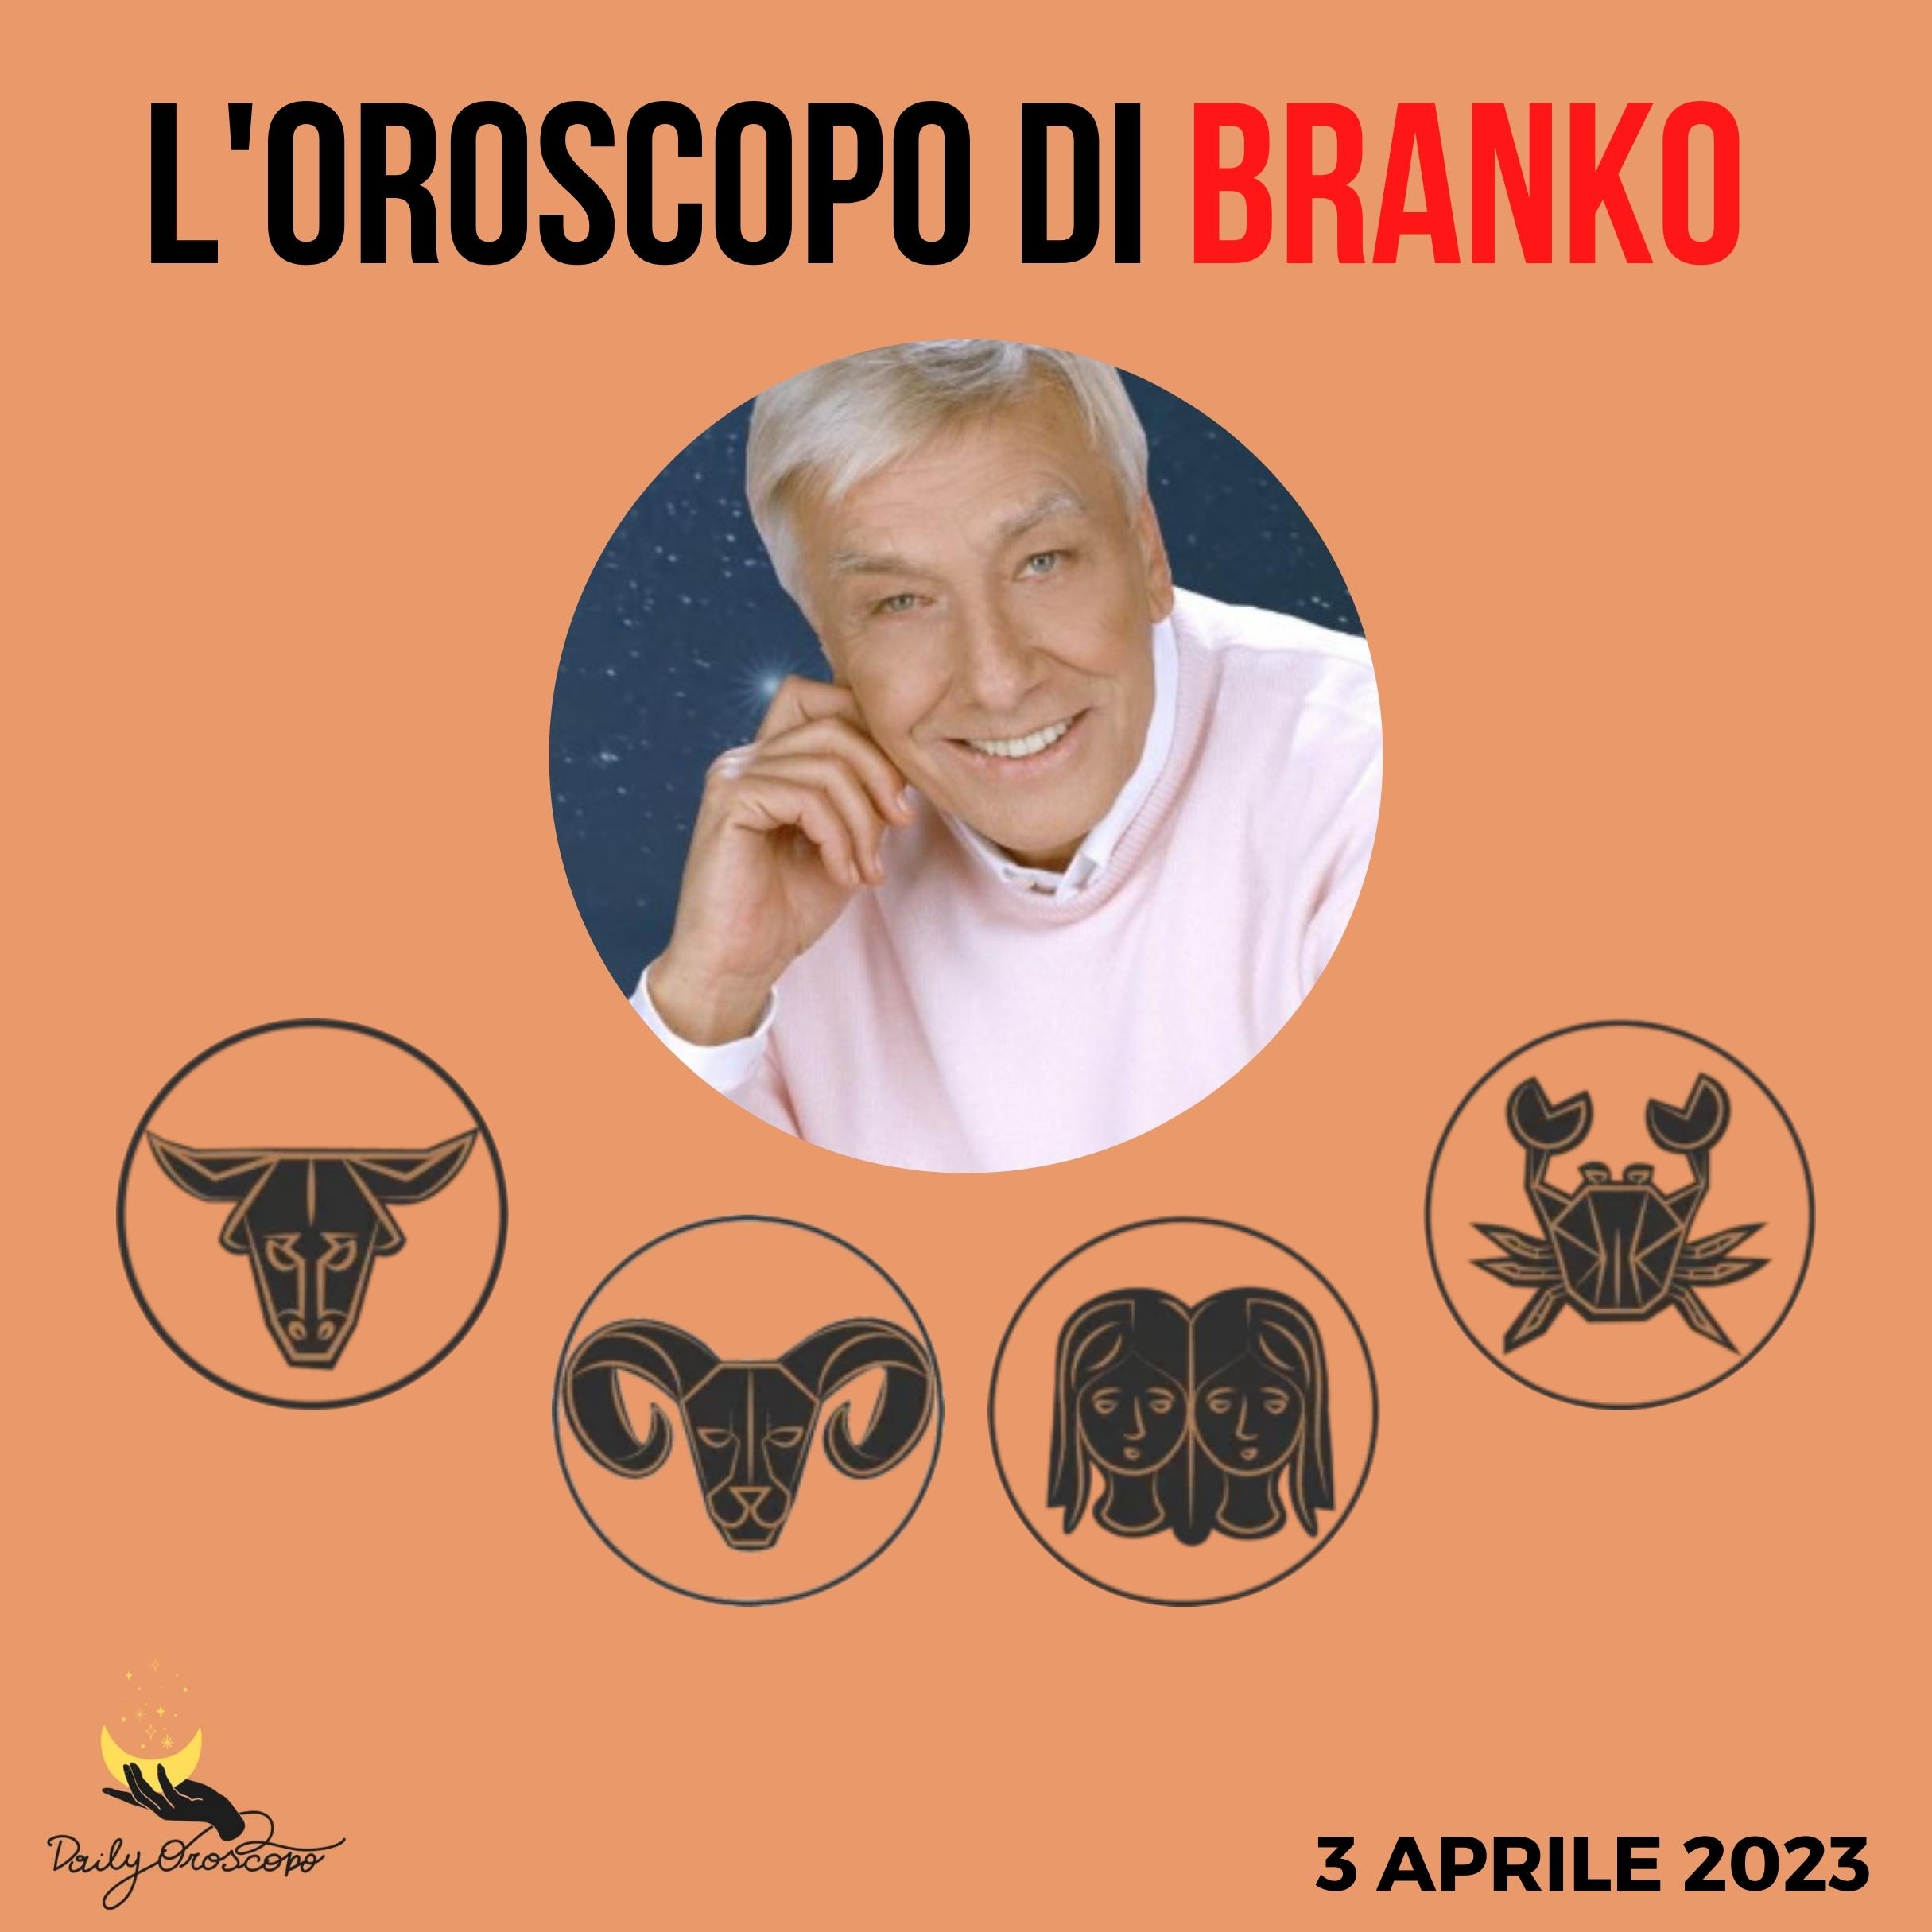 Oroscopo Branko oggi 3 aprile 2023 Toro Ariete Gemelli Cancro